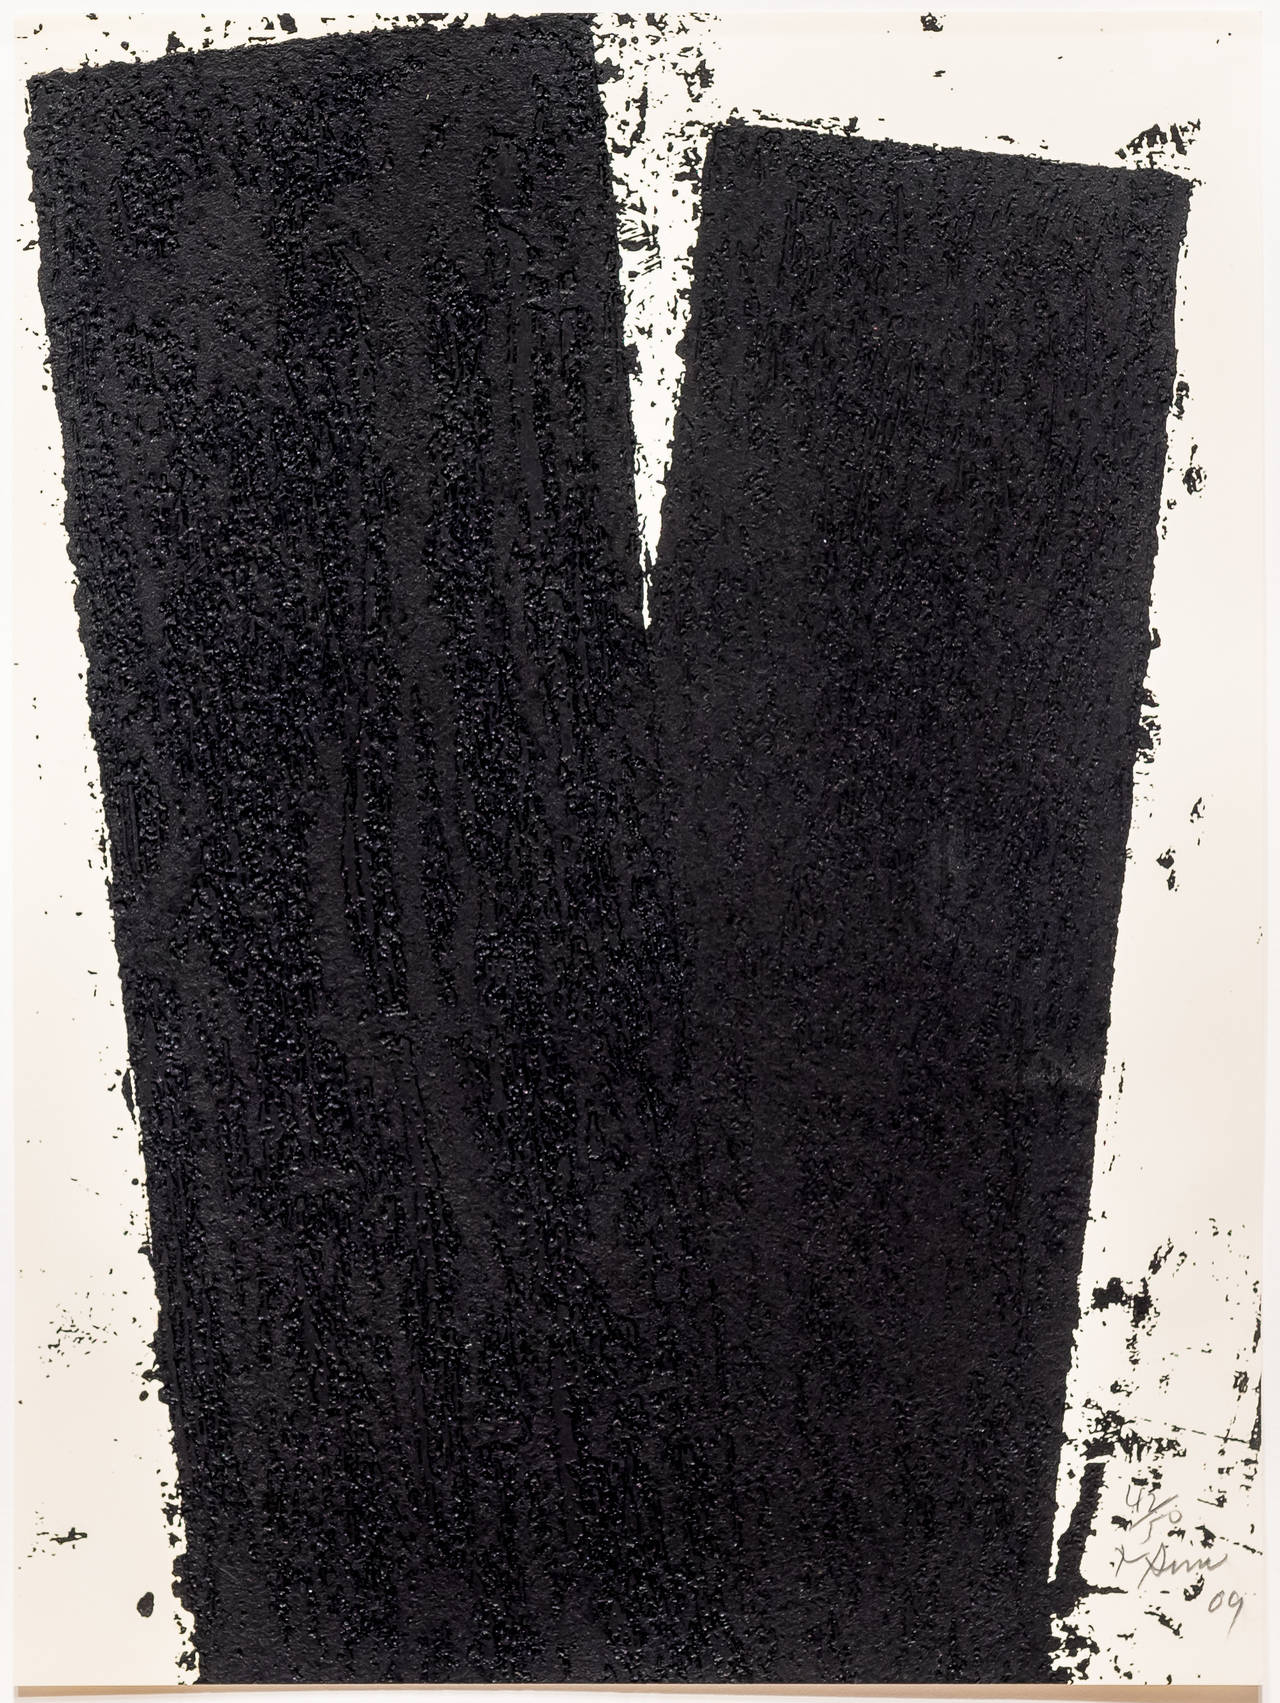 Promenade Notebook Drawing IV - Print by Richard Serra